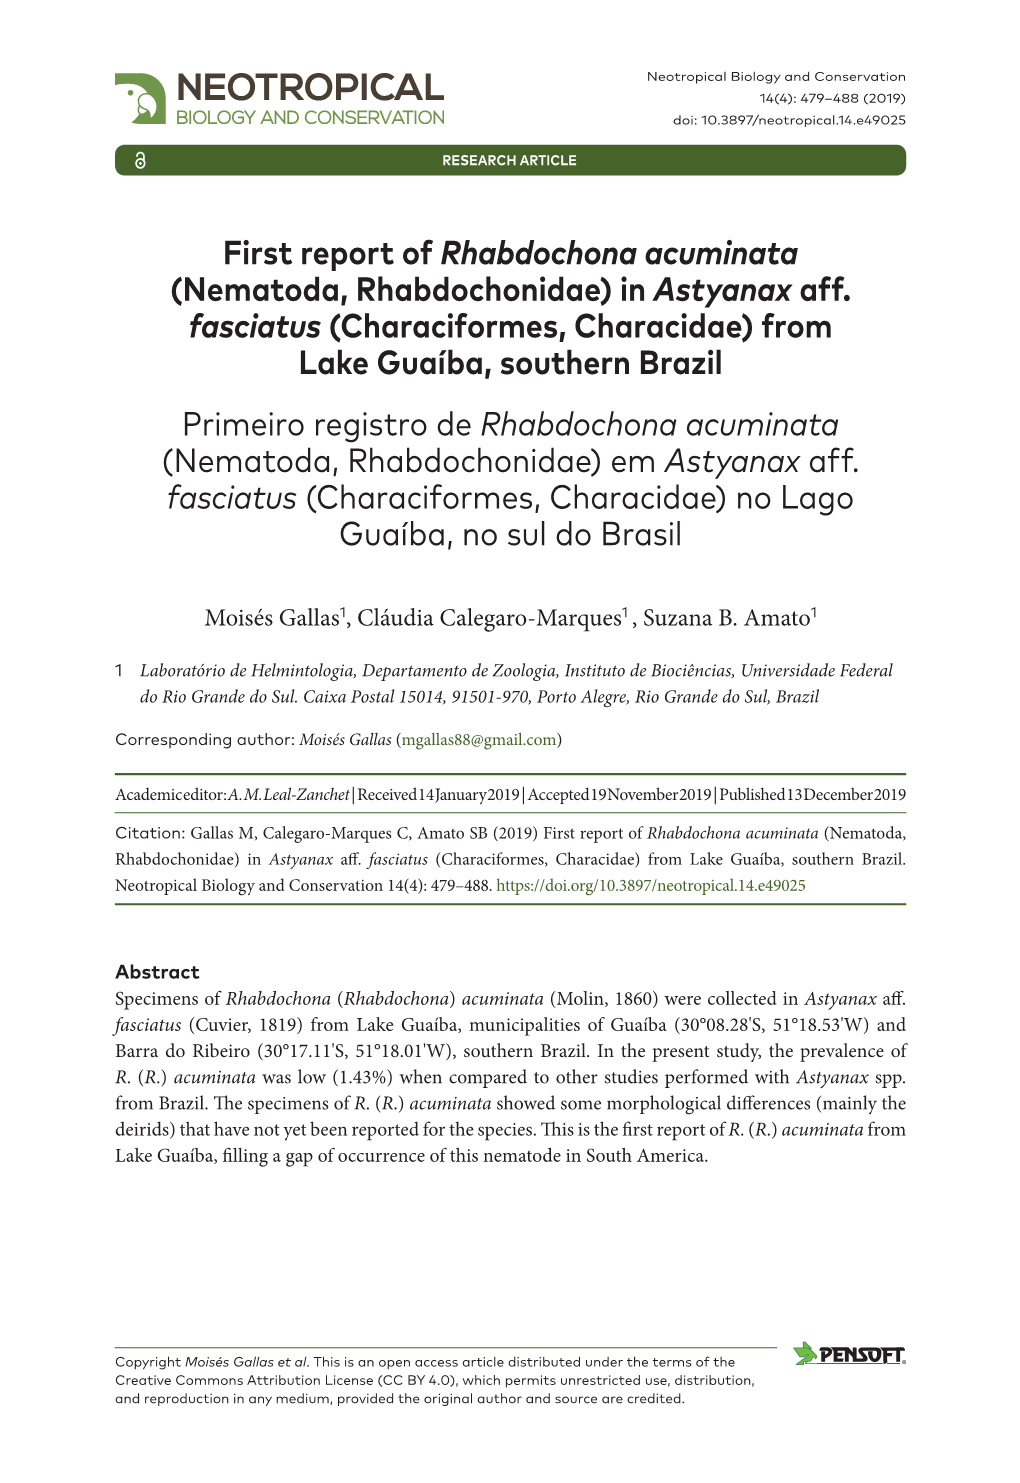 ﻿First Report of Rhabdochona Acuminata (Nematoda